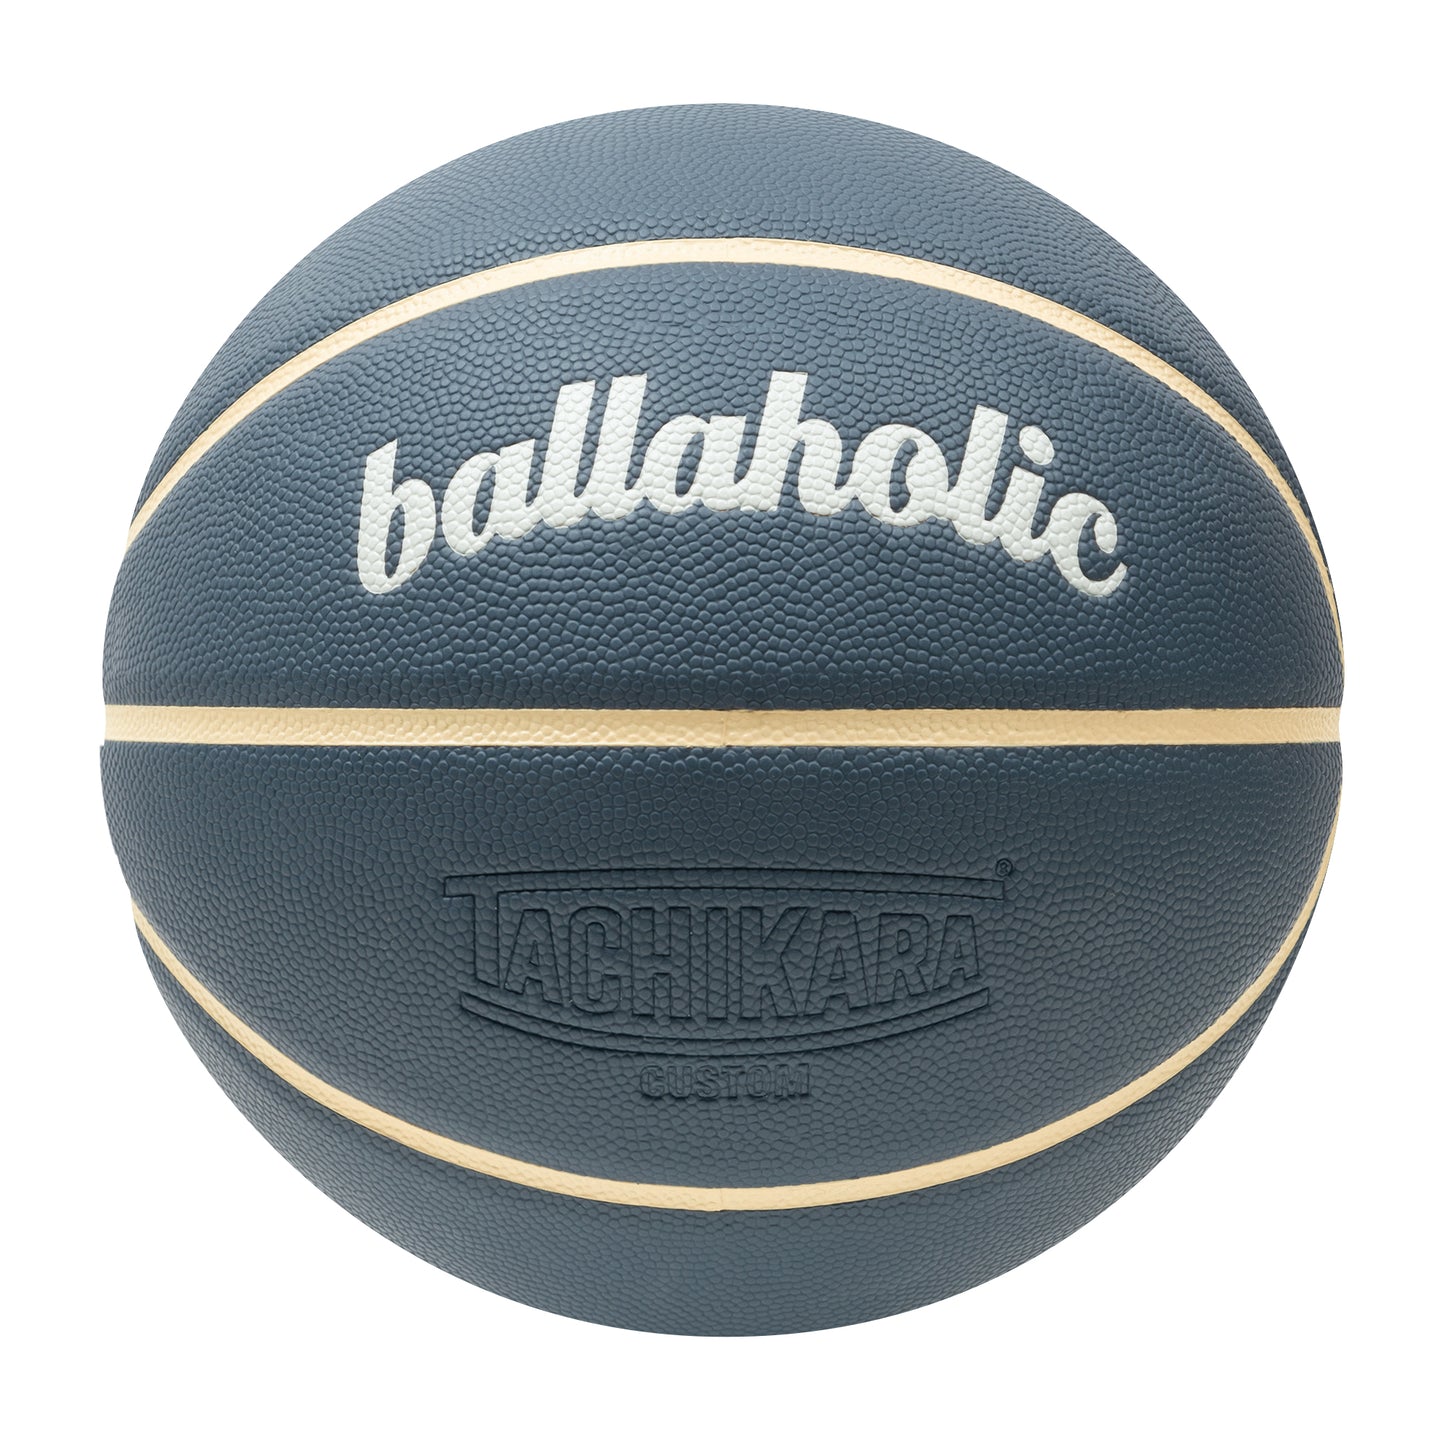 Playground Basketball / ballaholic x TACHIKARA (slate blue/cream beige) 7